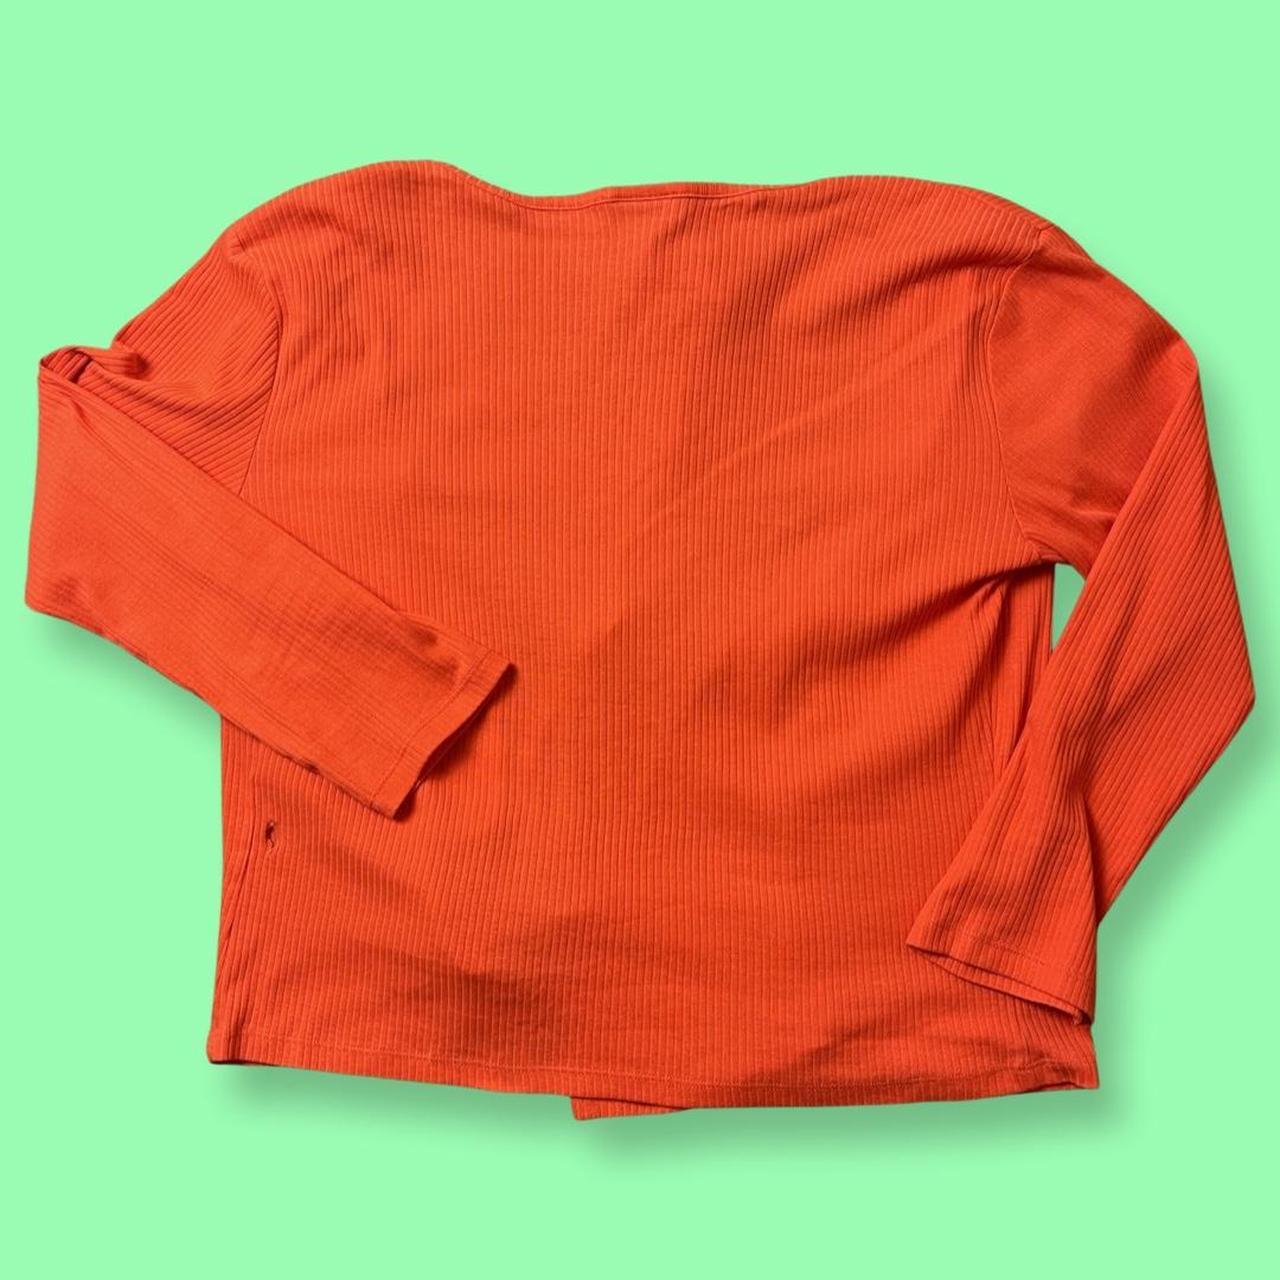 Product Image 2 - womens wrap tie around orange